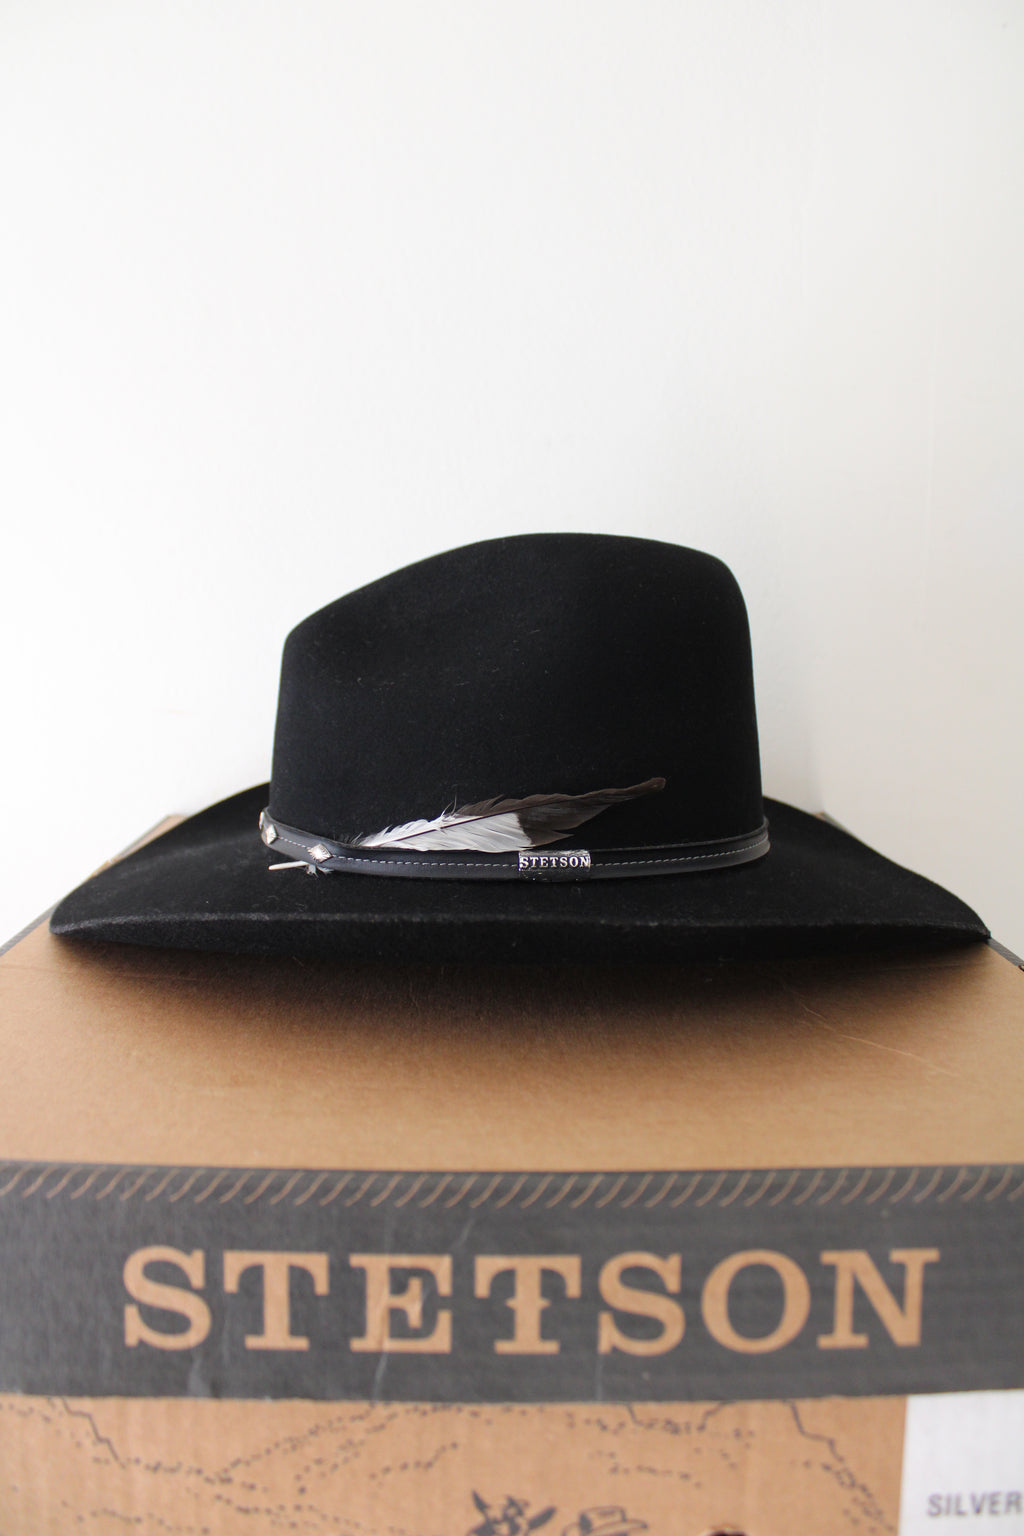 Stetson Silver Mine 07 Black 3 3/4 Brim  Black Cowboy Hat | Size 7 1/2